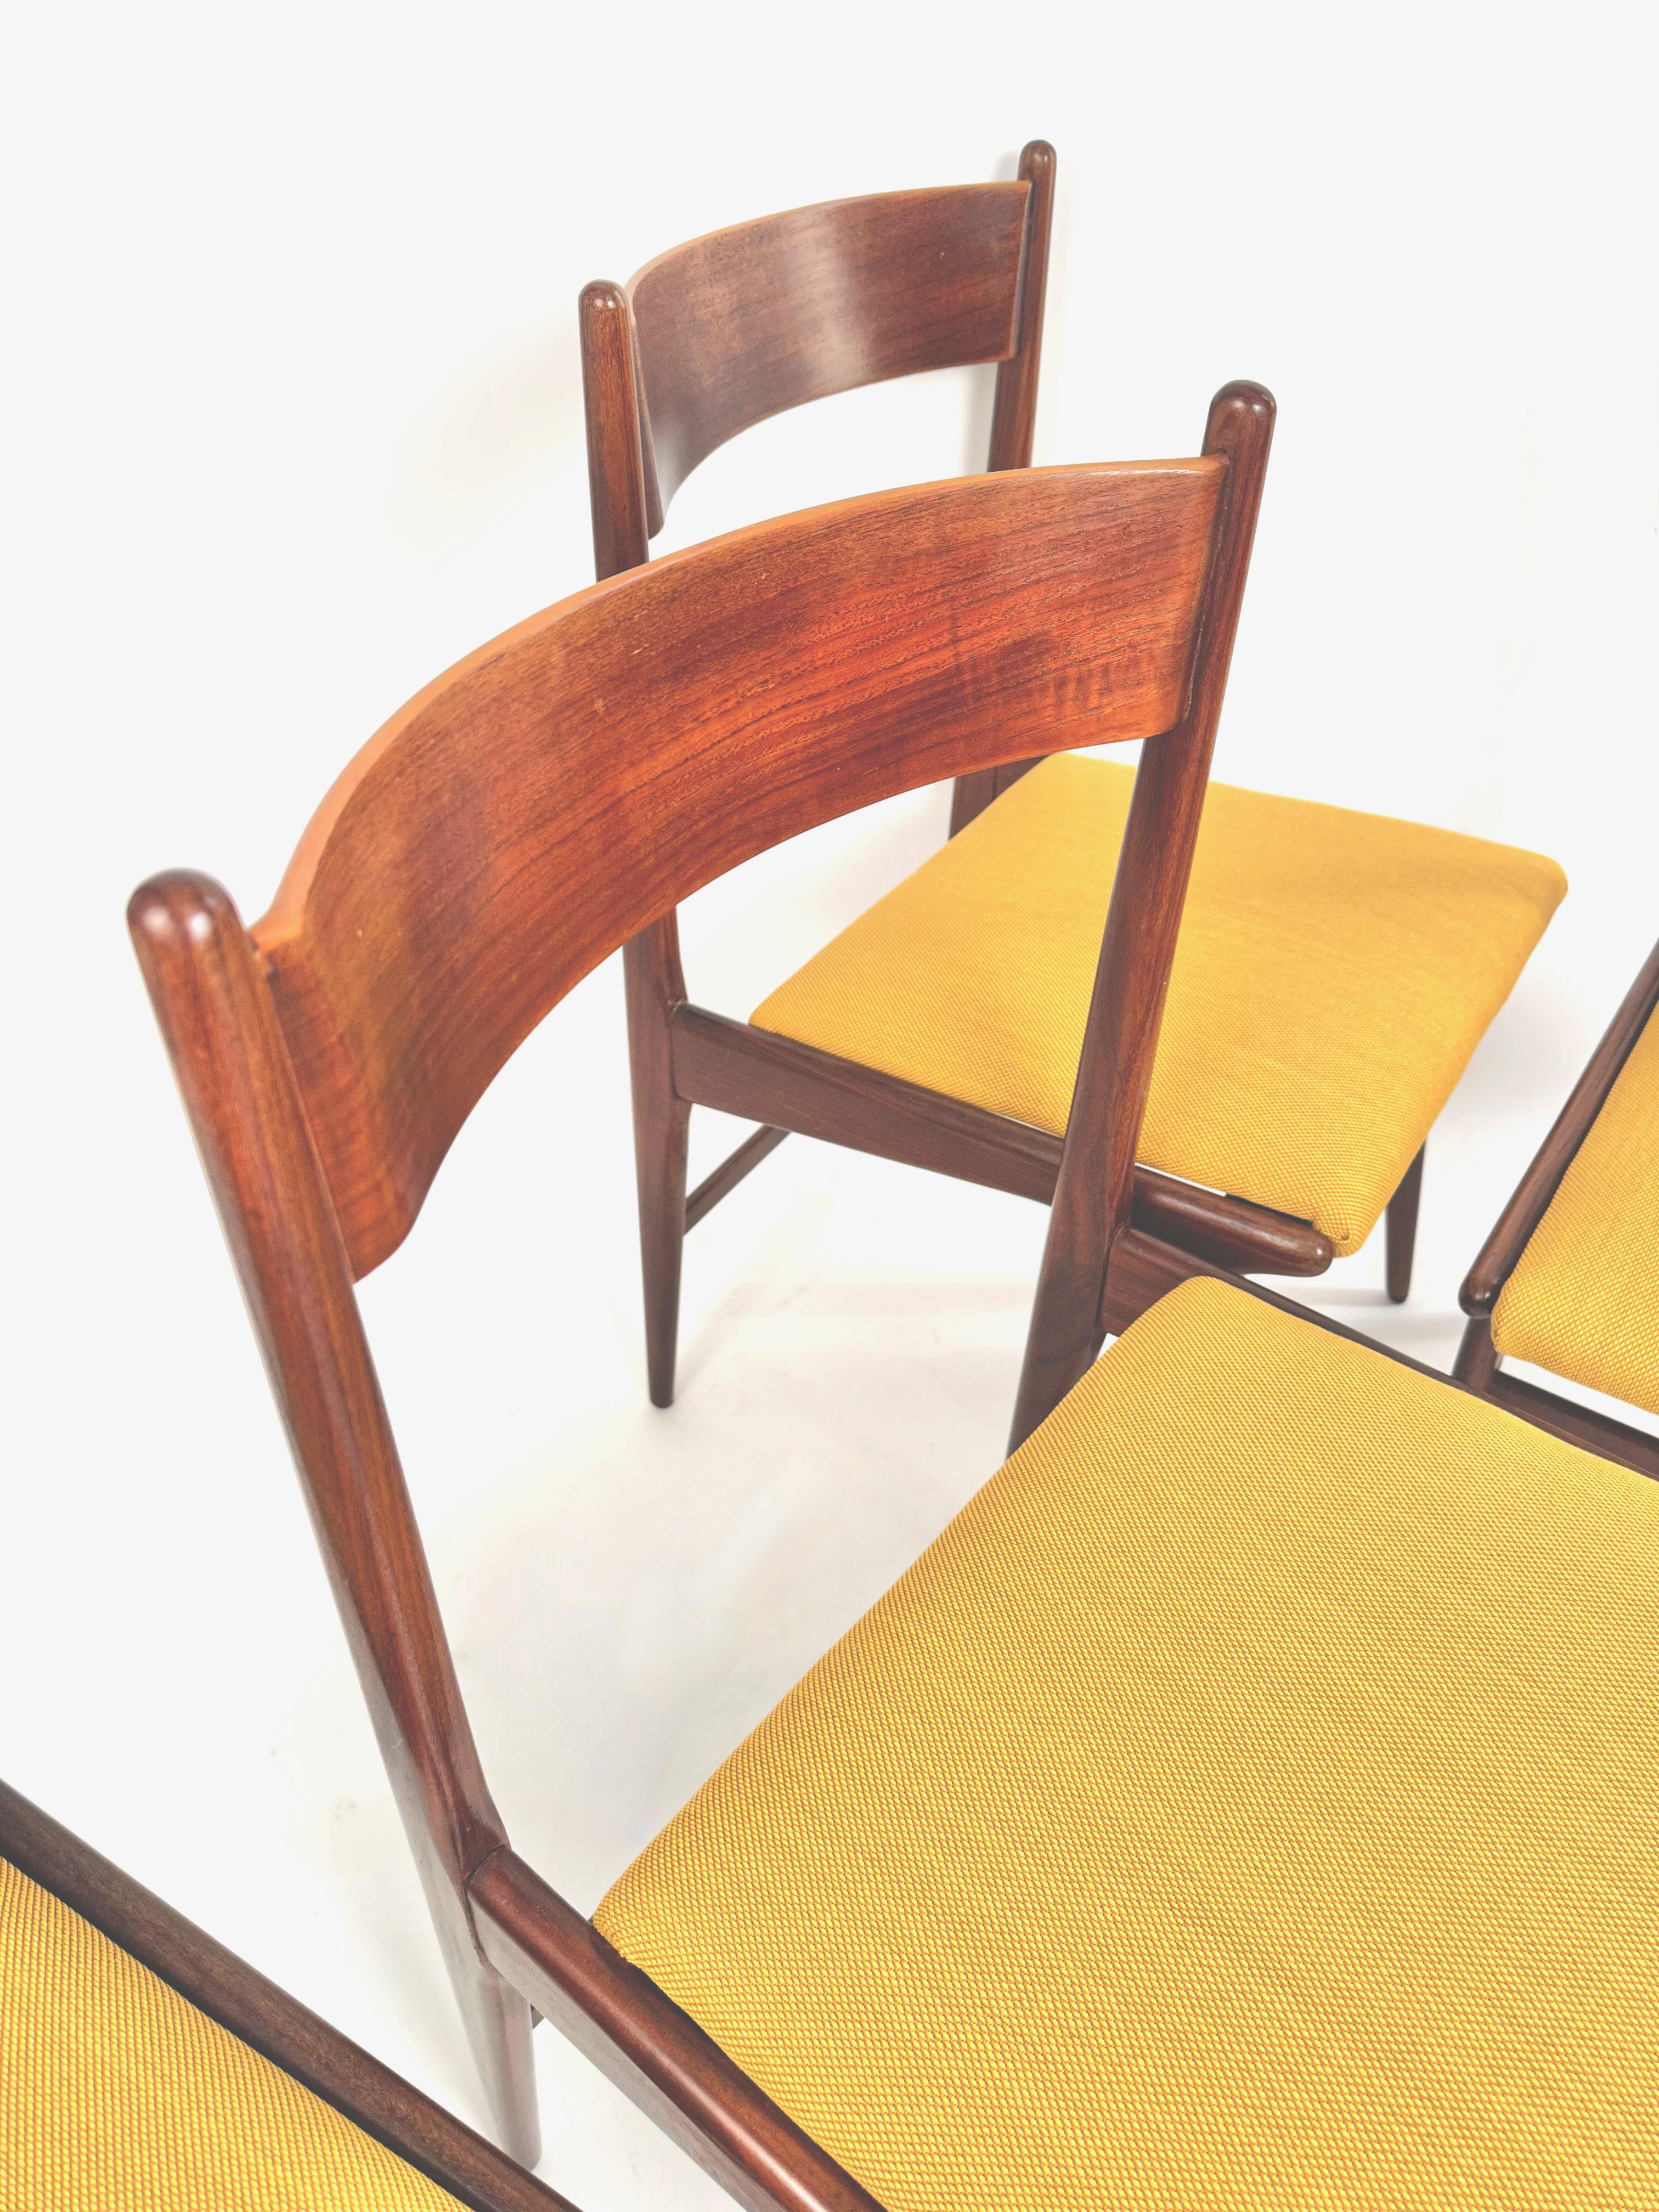 Carlo de Carli MidSet of Four Teak Dining Chairs in Kvadrat Yello Fabric, 1960s For Sale 5